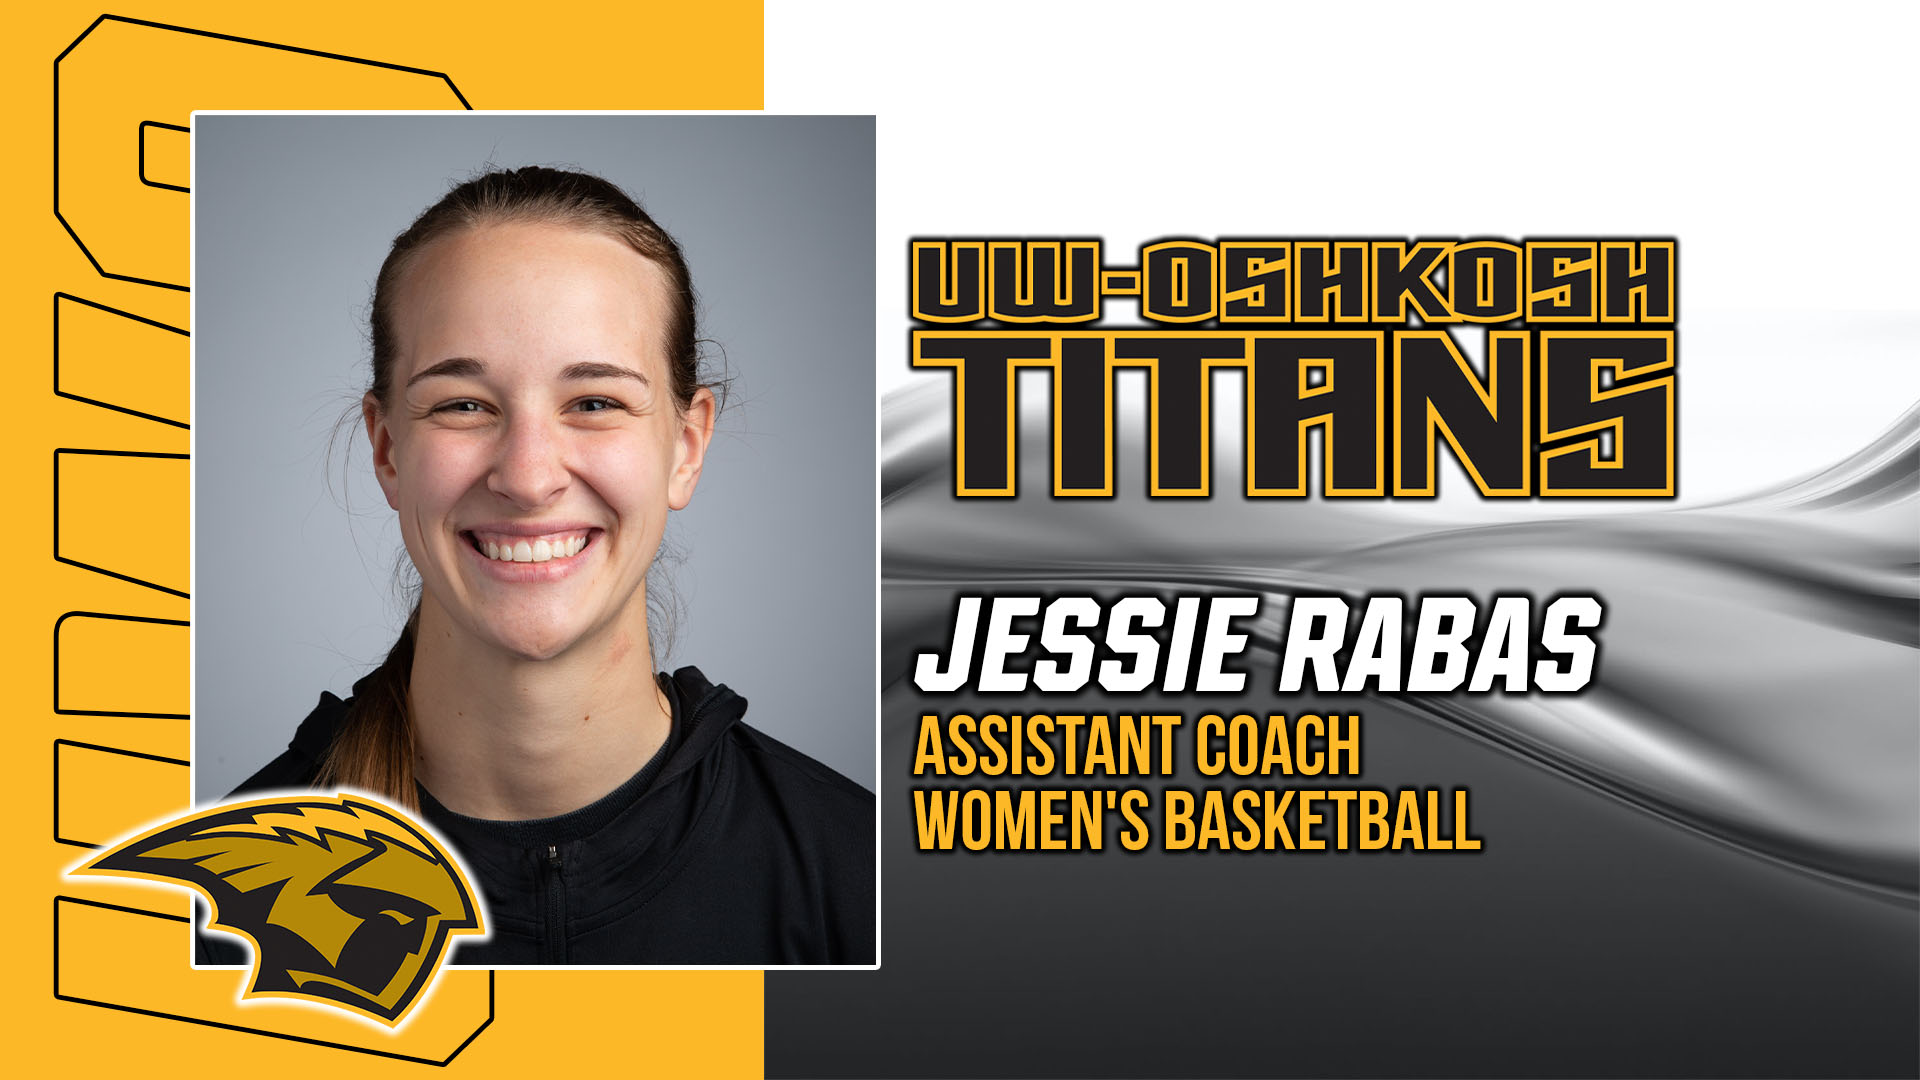 Rabas Returns To Women's Basketball Program As Assistant Coach